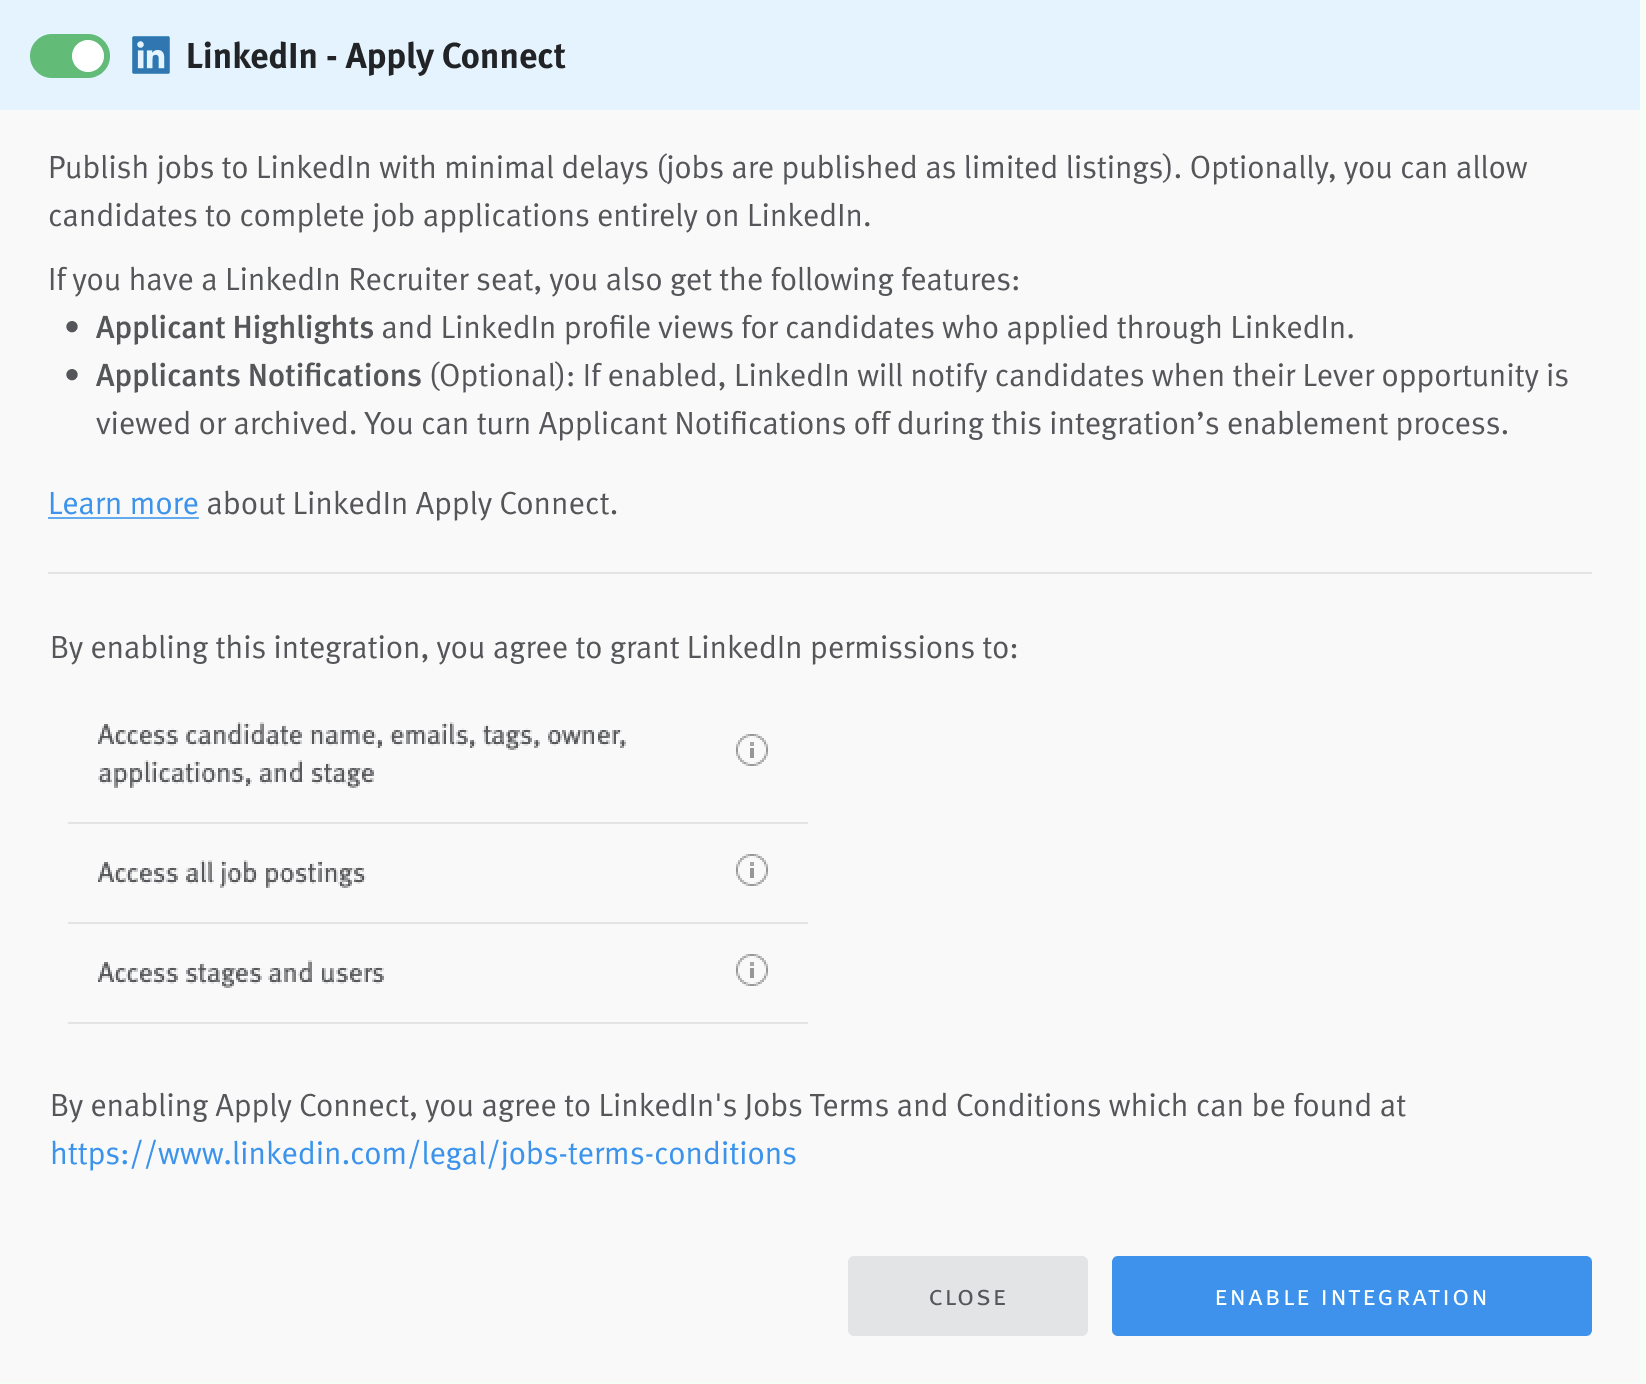 LinkedIn Apply Connect integration tile in Lever Settings.